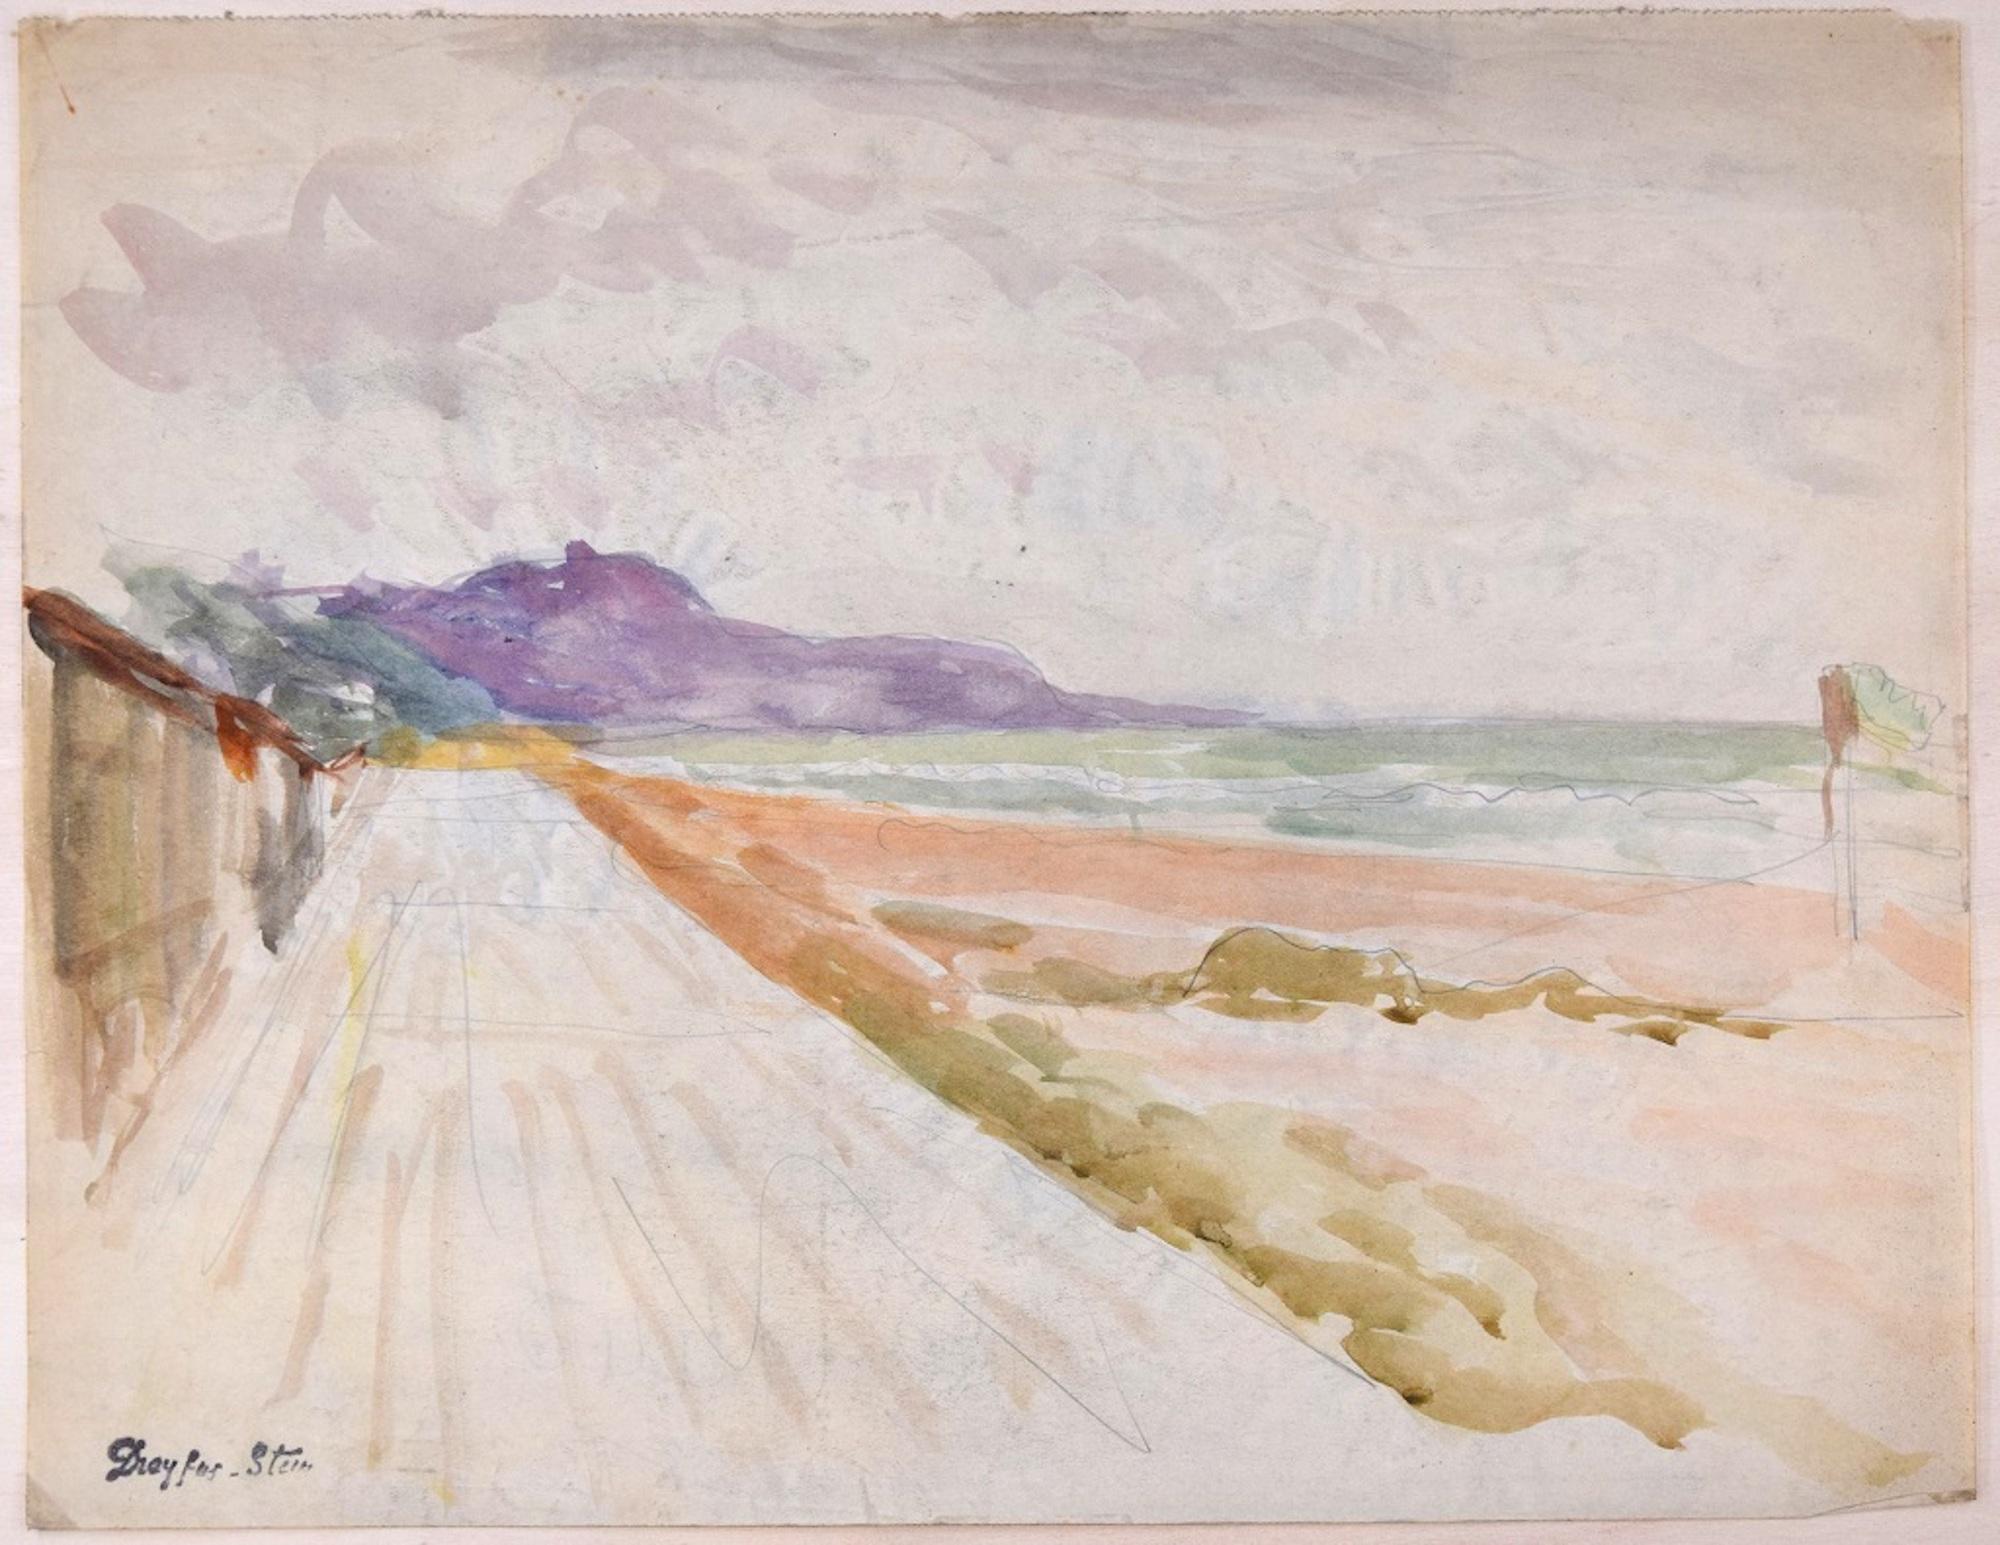 Jean Dreyfus-Stern Landscape Art - Landscape with Road - Pencil Drawing and Watercolor by J. Dreyfus-Stern 